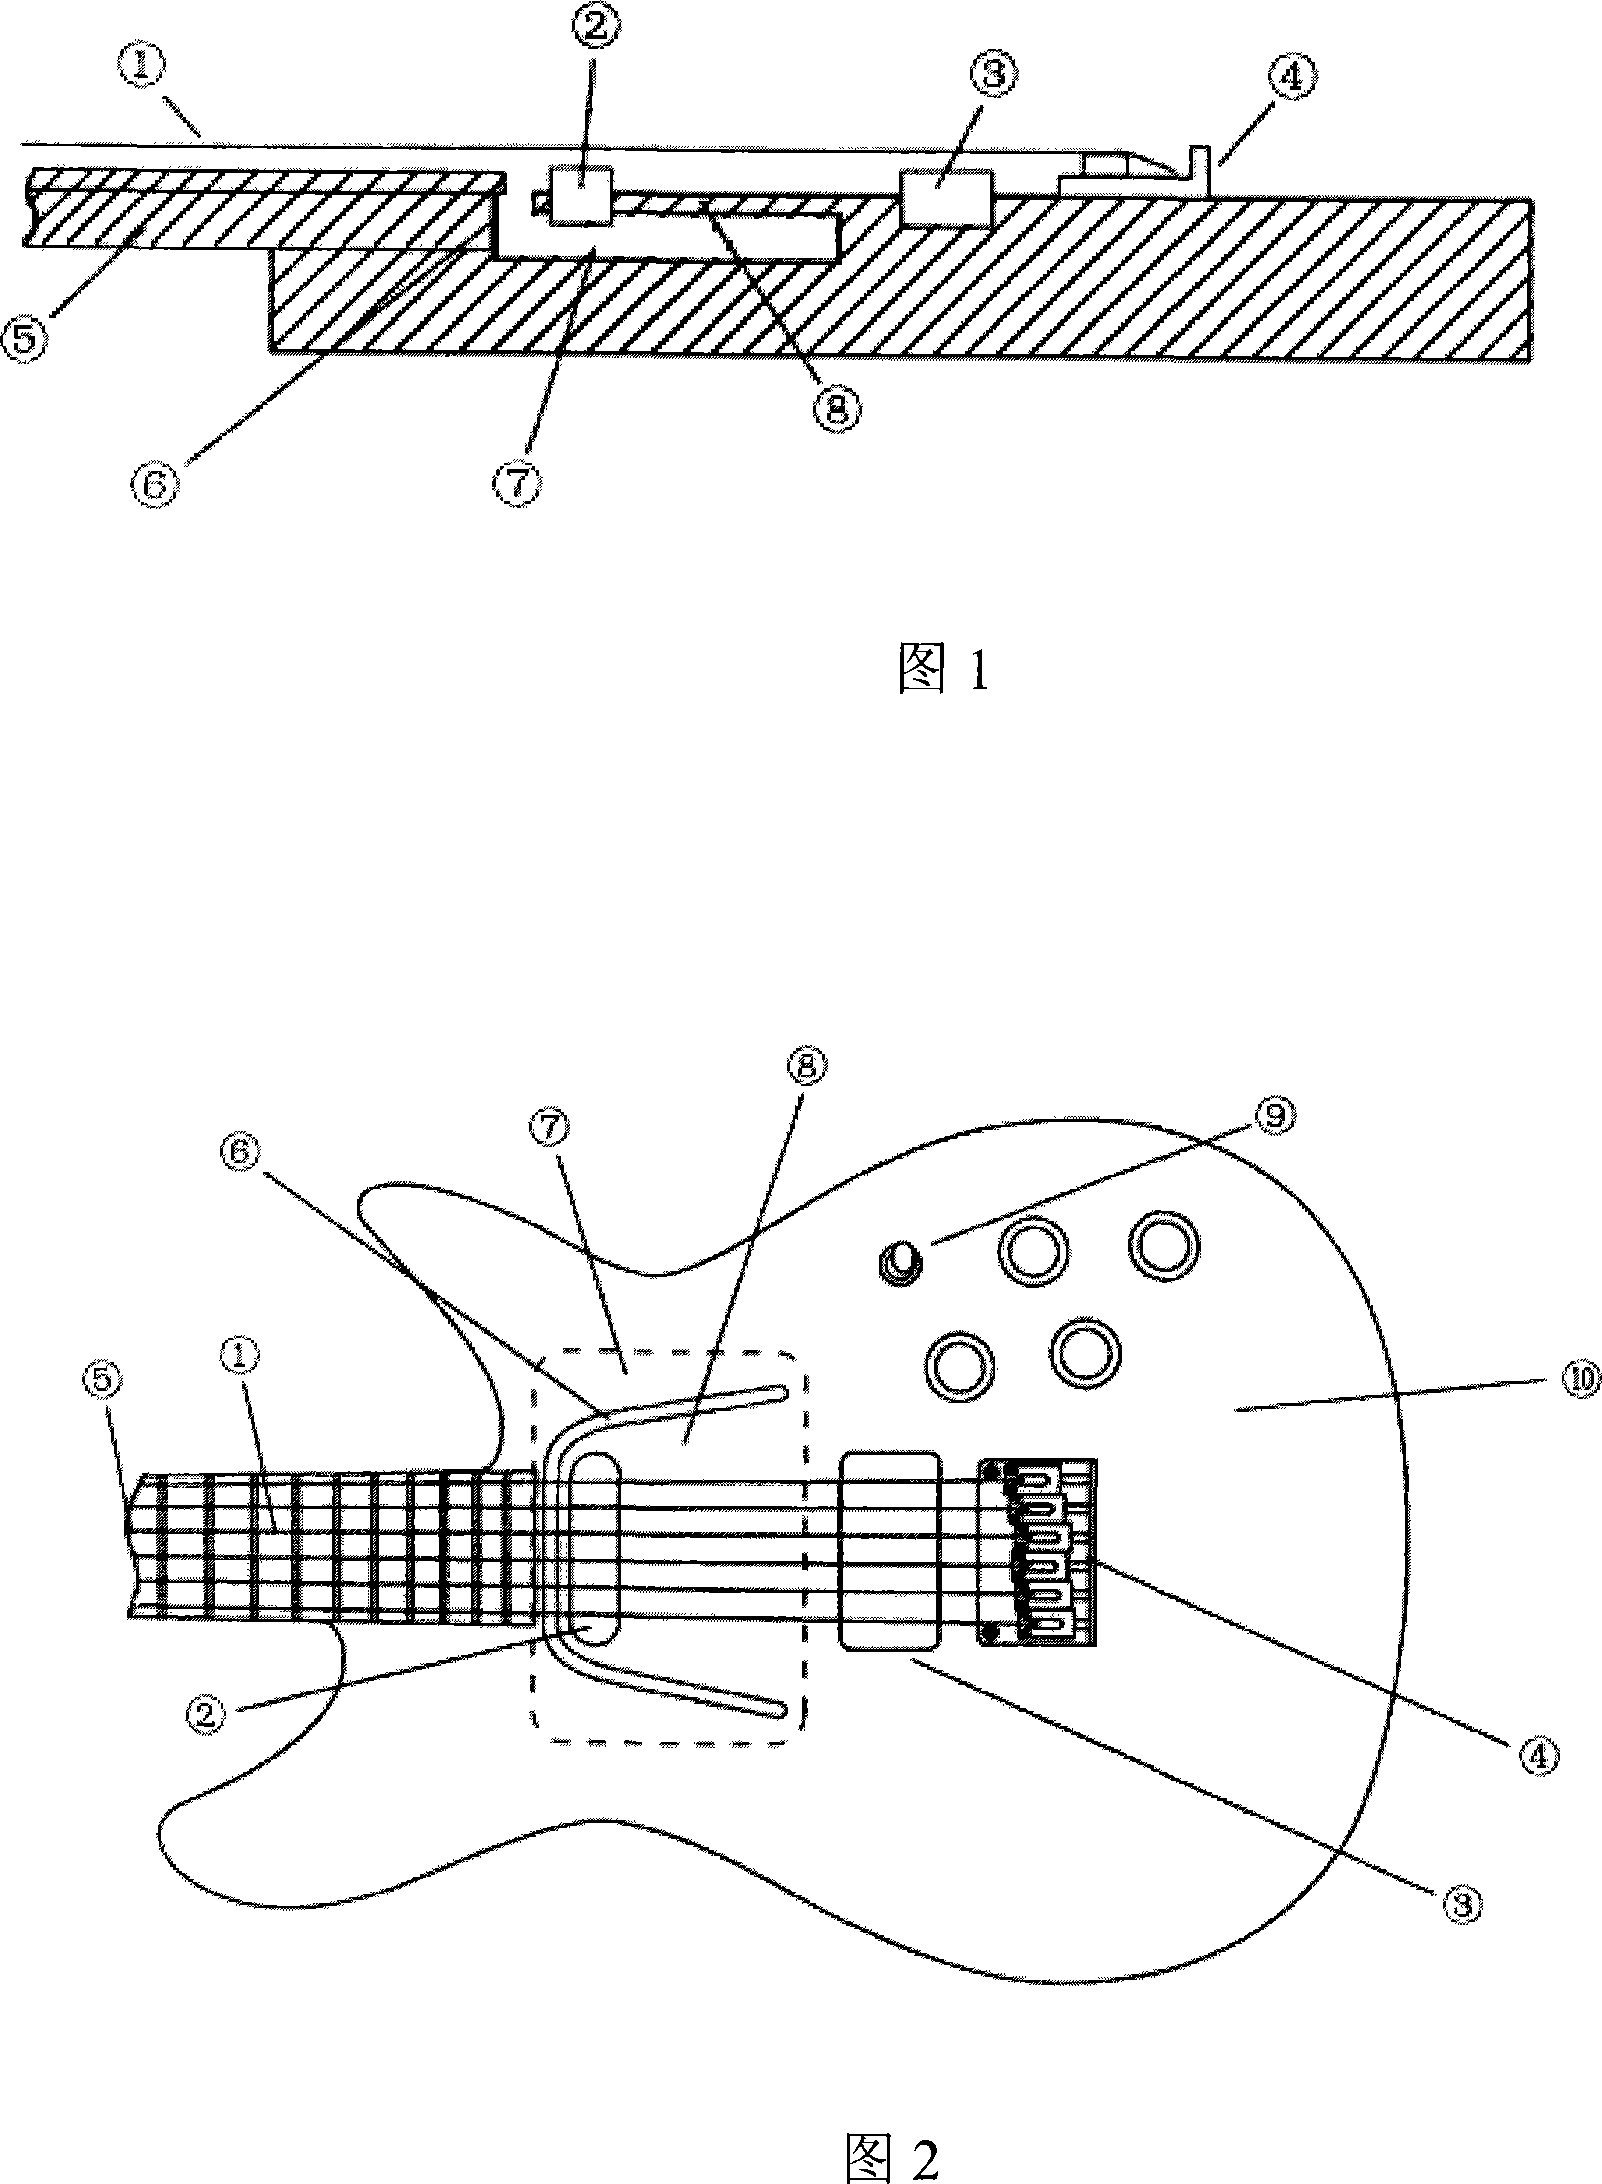 Semi-hollow suspending type adapterization electric guitar